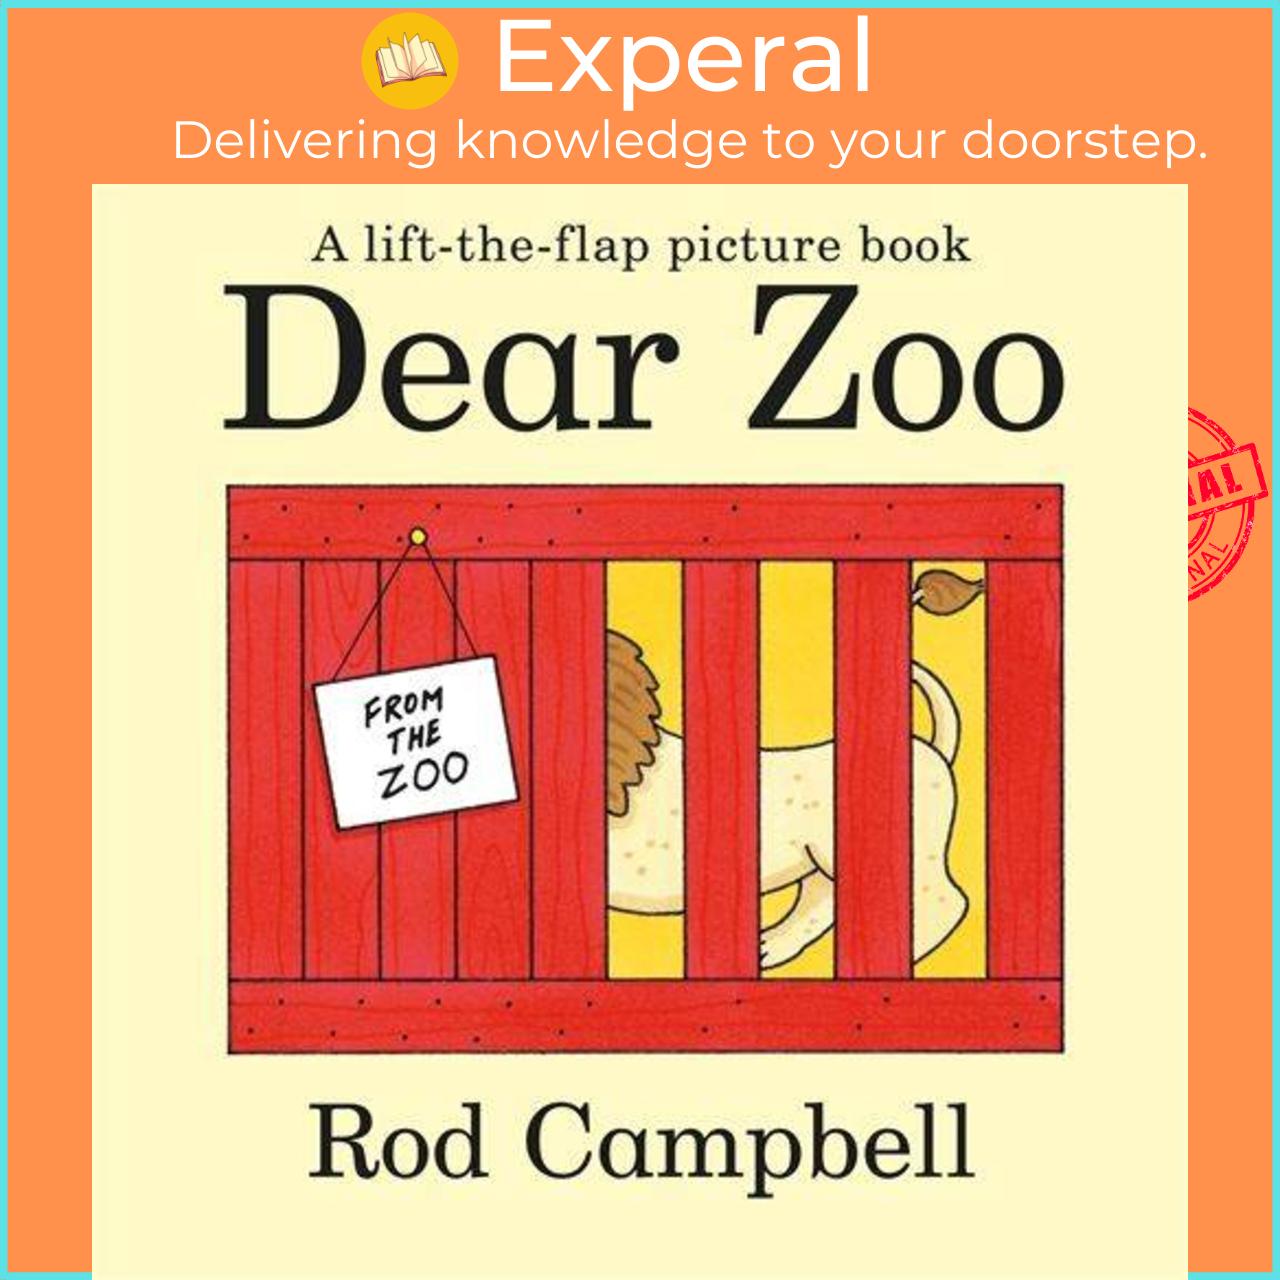 Sách - Dear Zoo by Rod Campbell (UK edition, paperback)